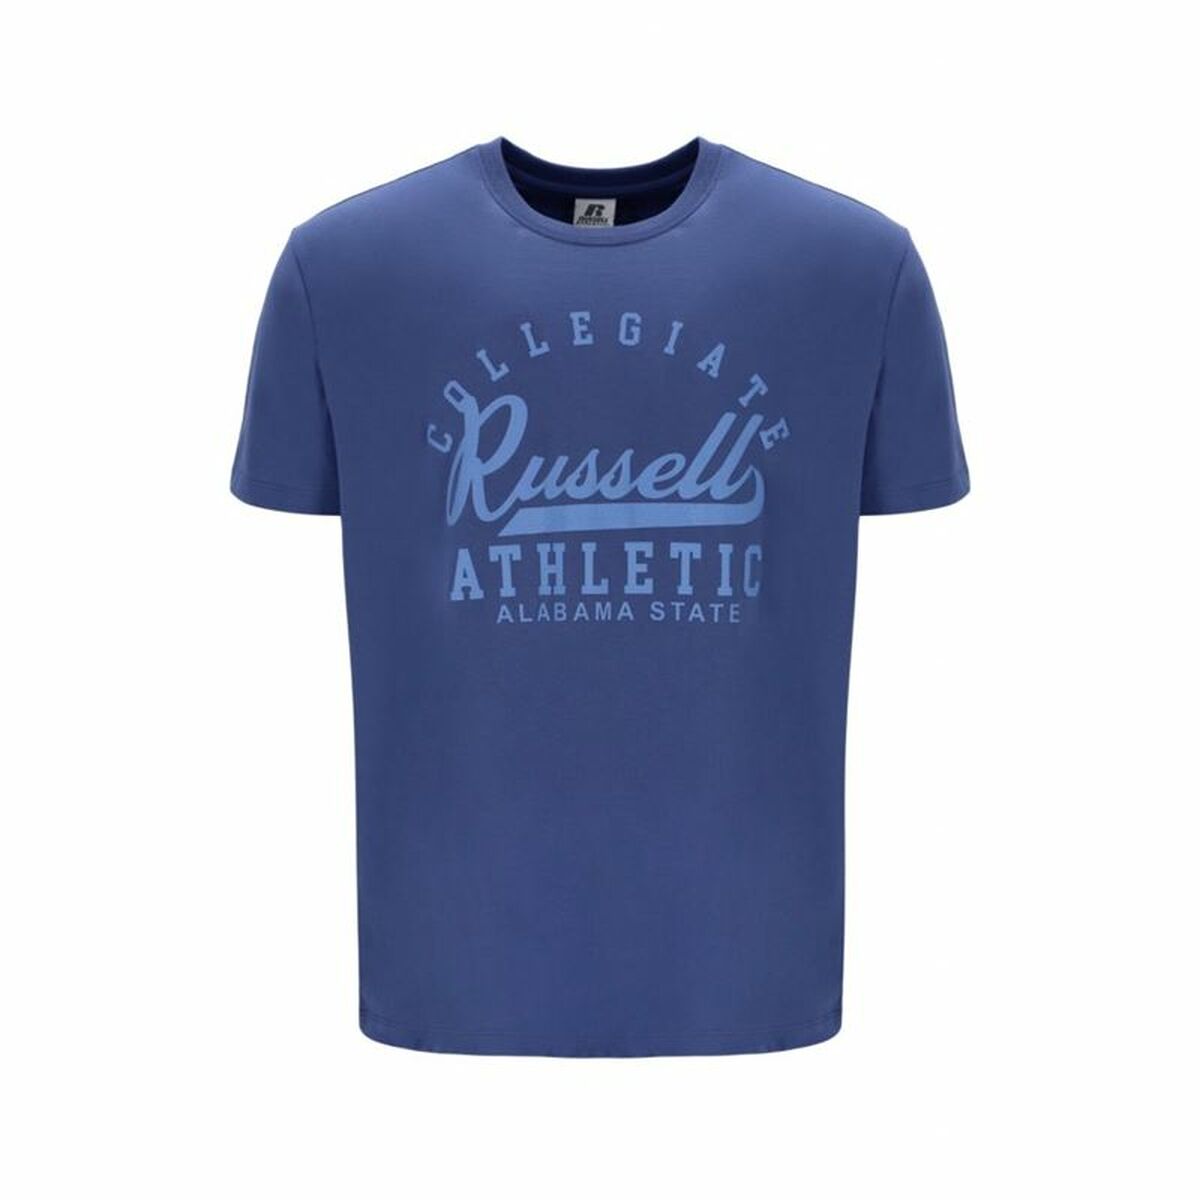 Kurzarm-T-Shirt Russell Athletic Amt A30211 Blau Herren